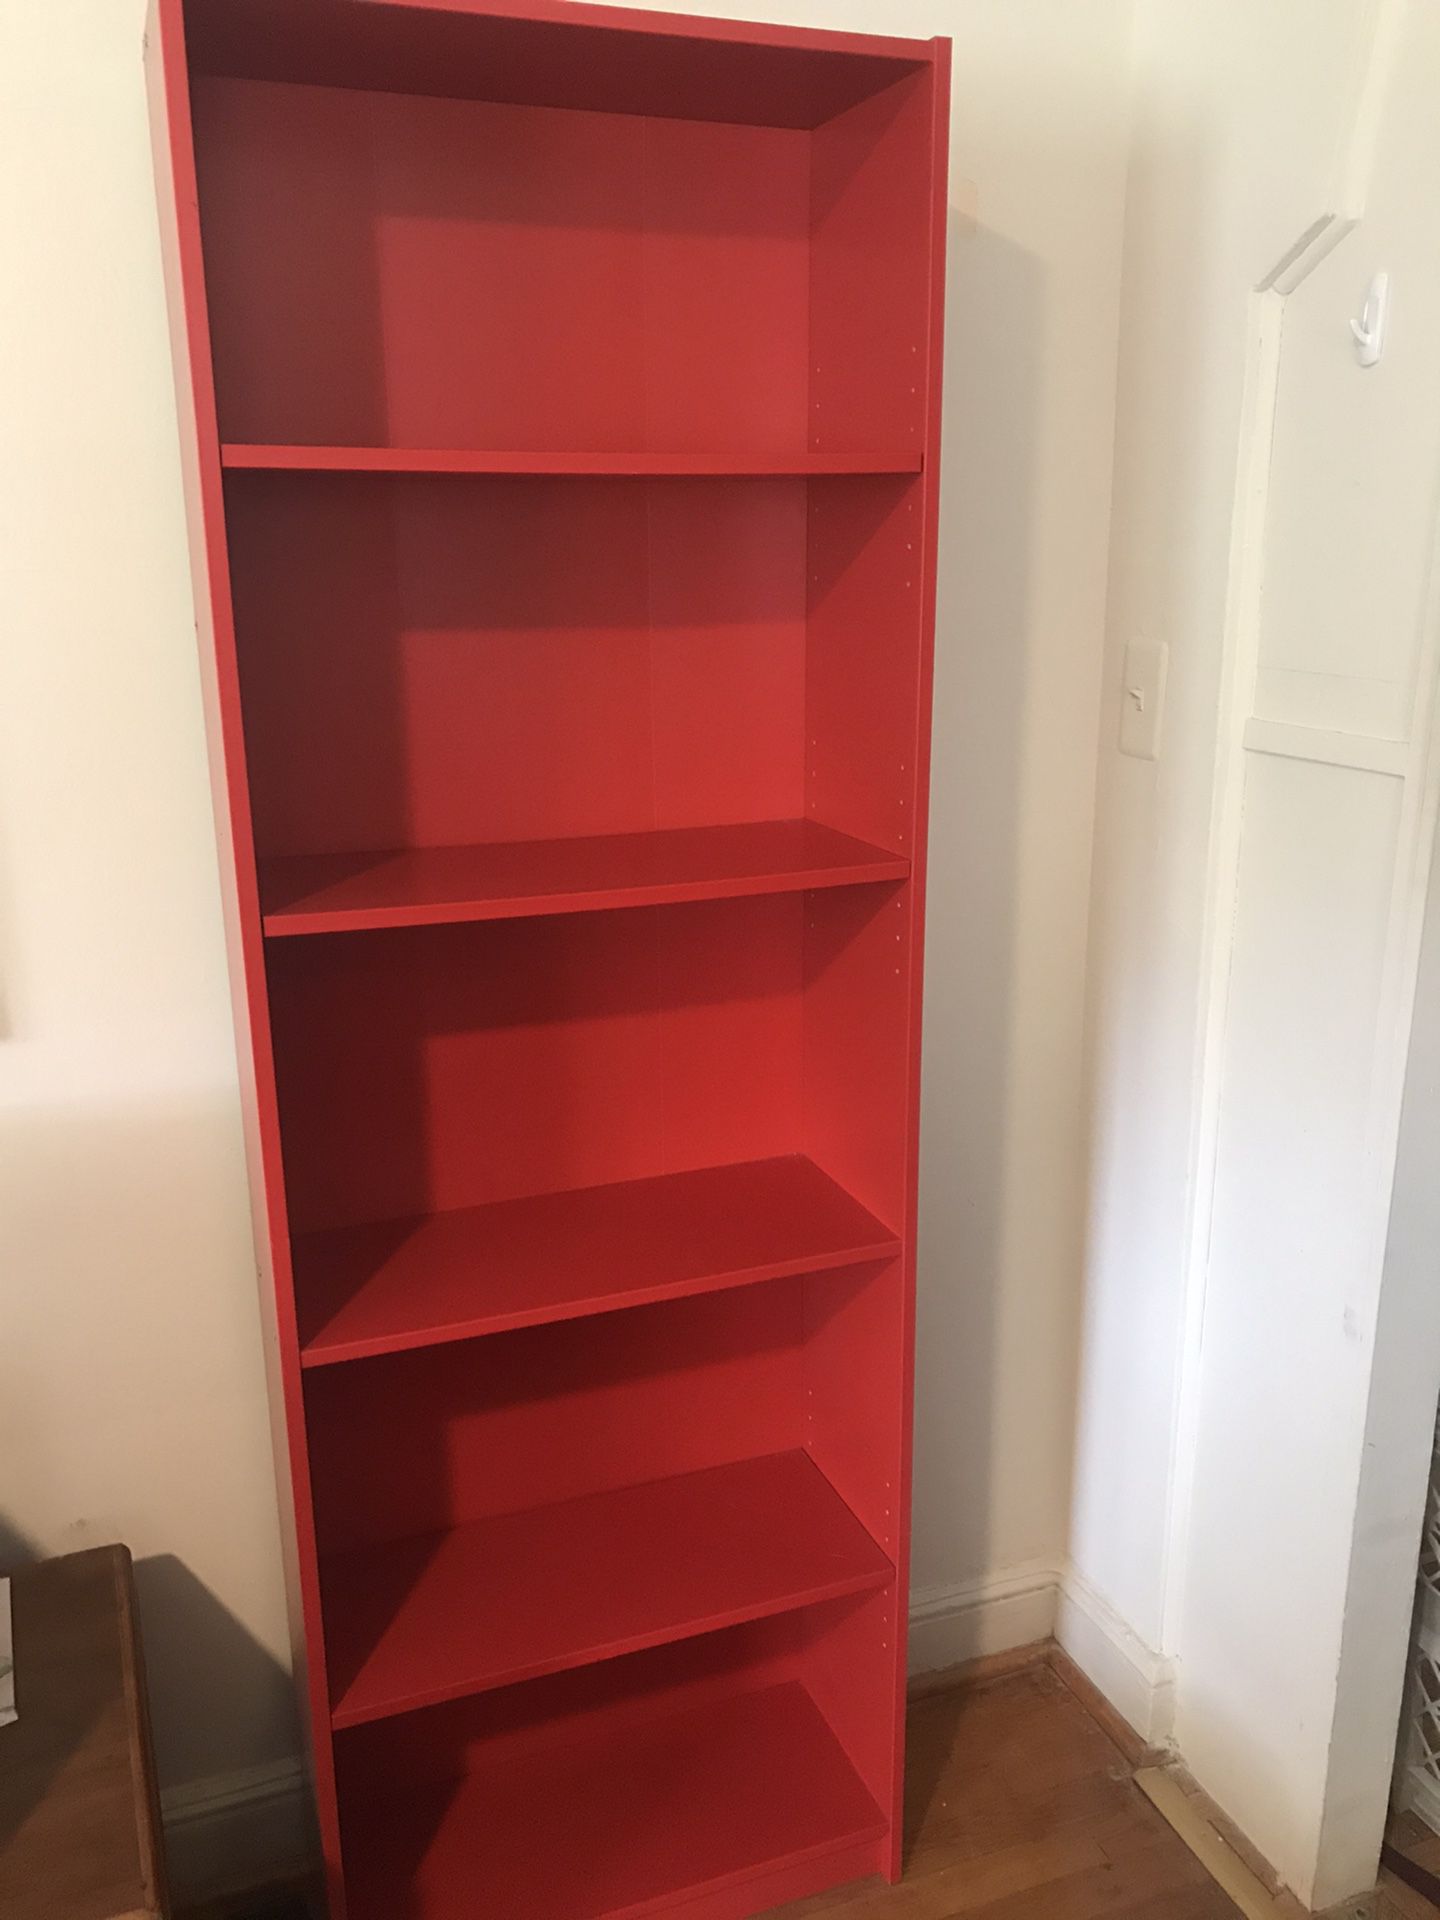 Red bookshelf